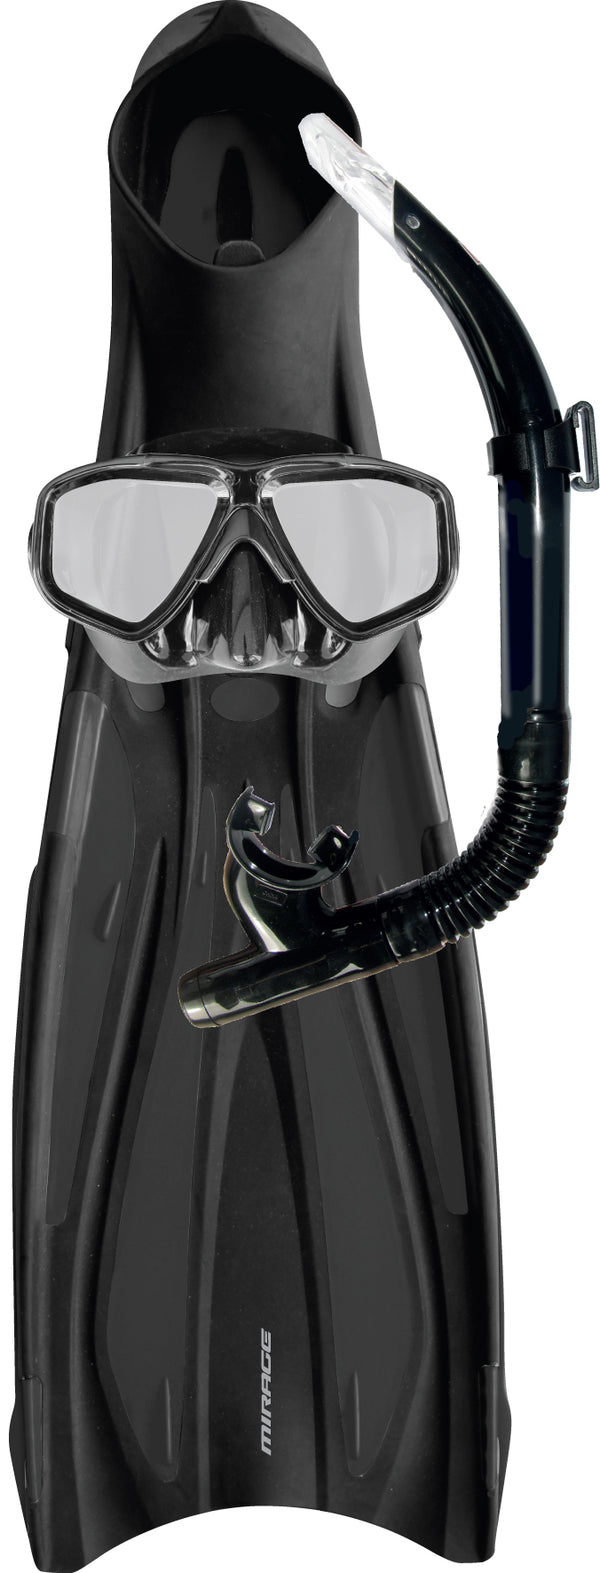 Mirage Barracuda Silicone Mask, Snorkel & Fin Set -Black - L (Adult)